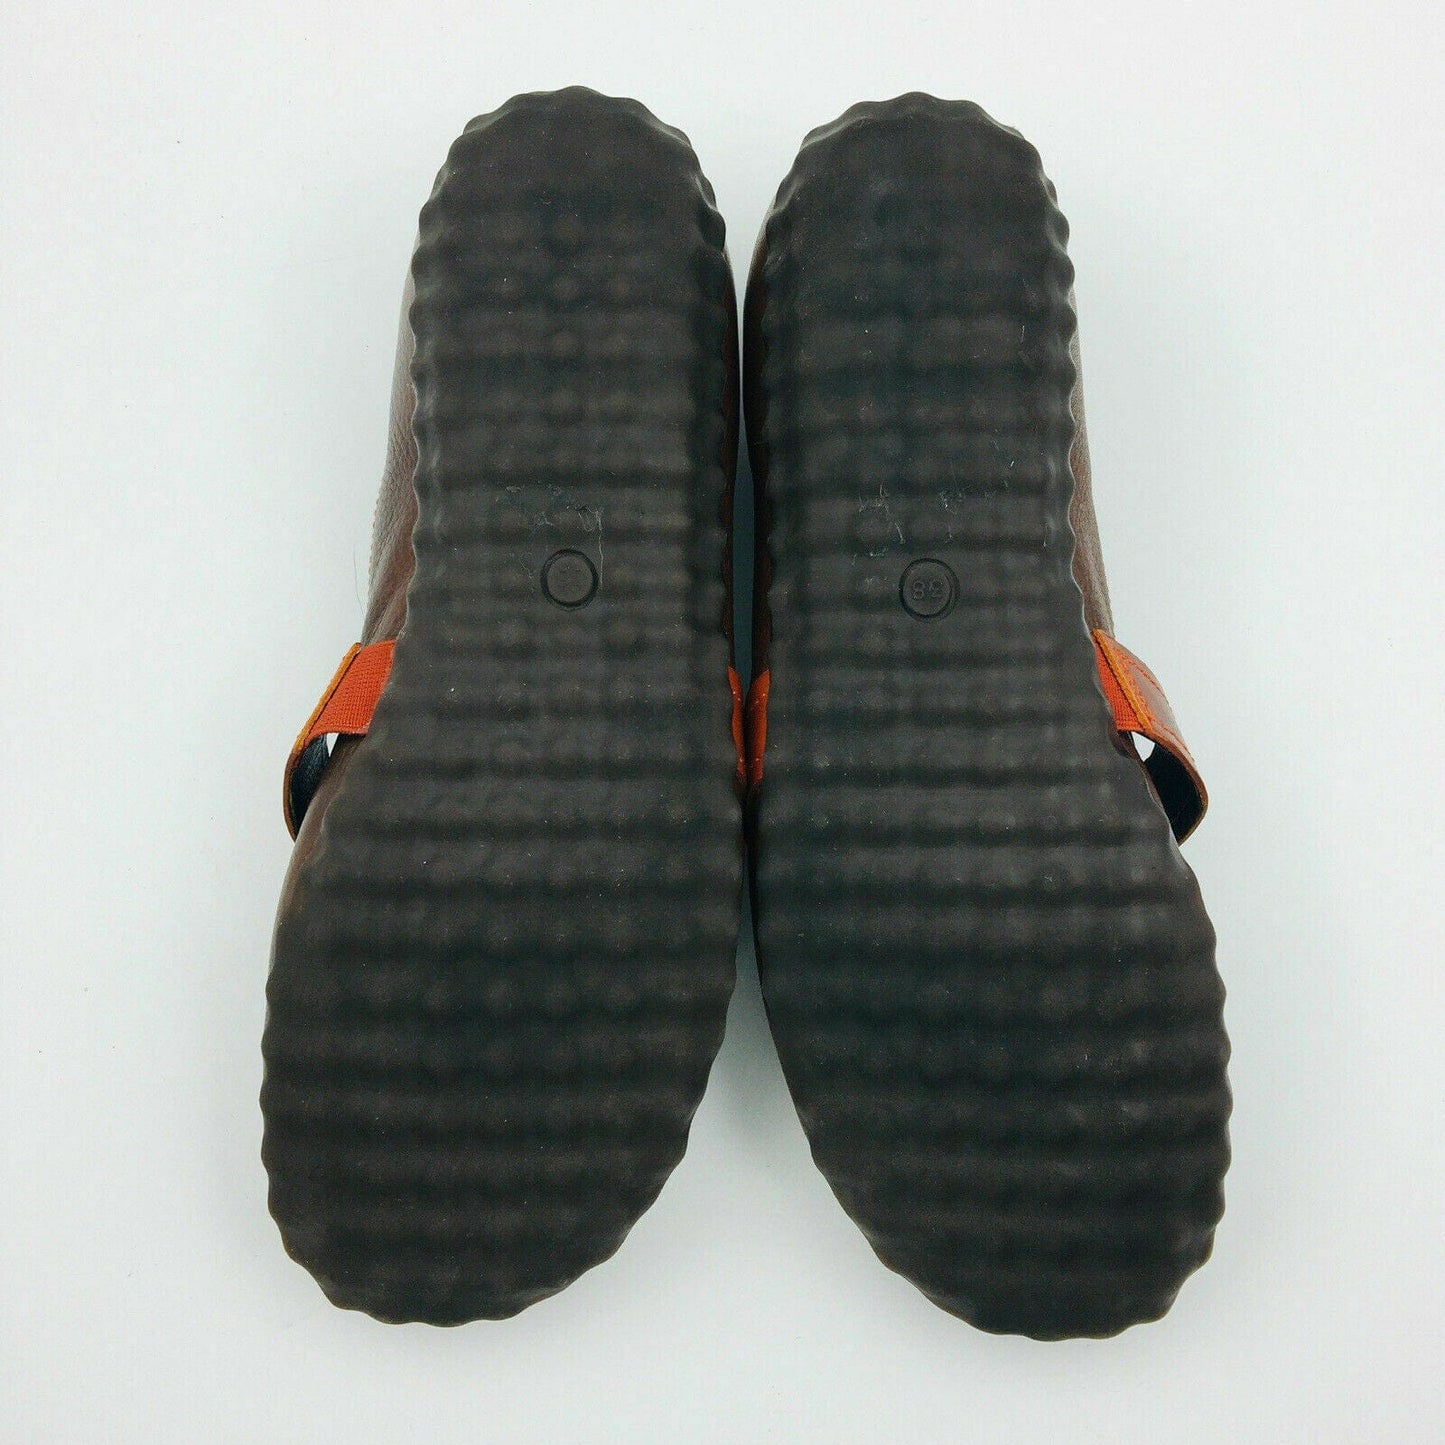 Heyraud Womens Maryjane Shoes Size 7.5 Brown Leather Slip On Comfort 6111 - parsimonyshoppes